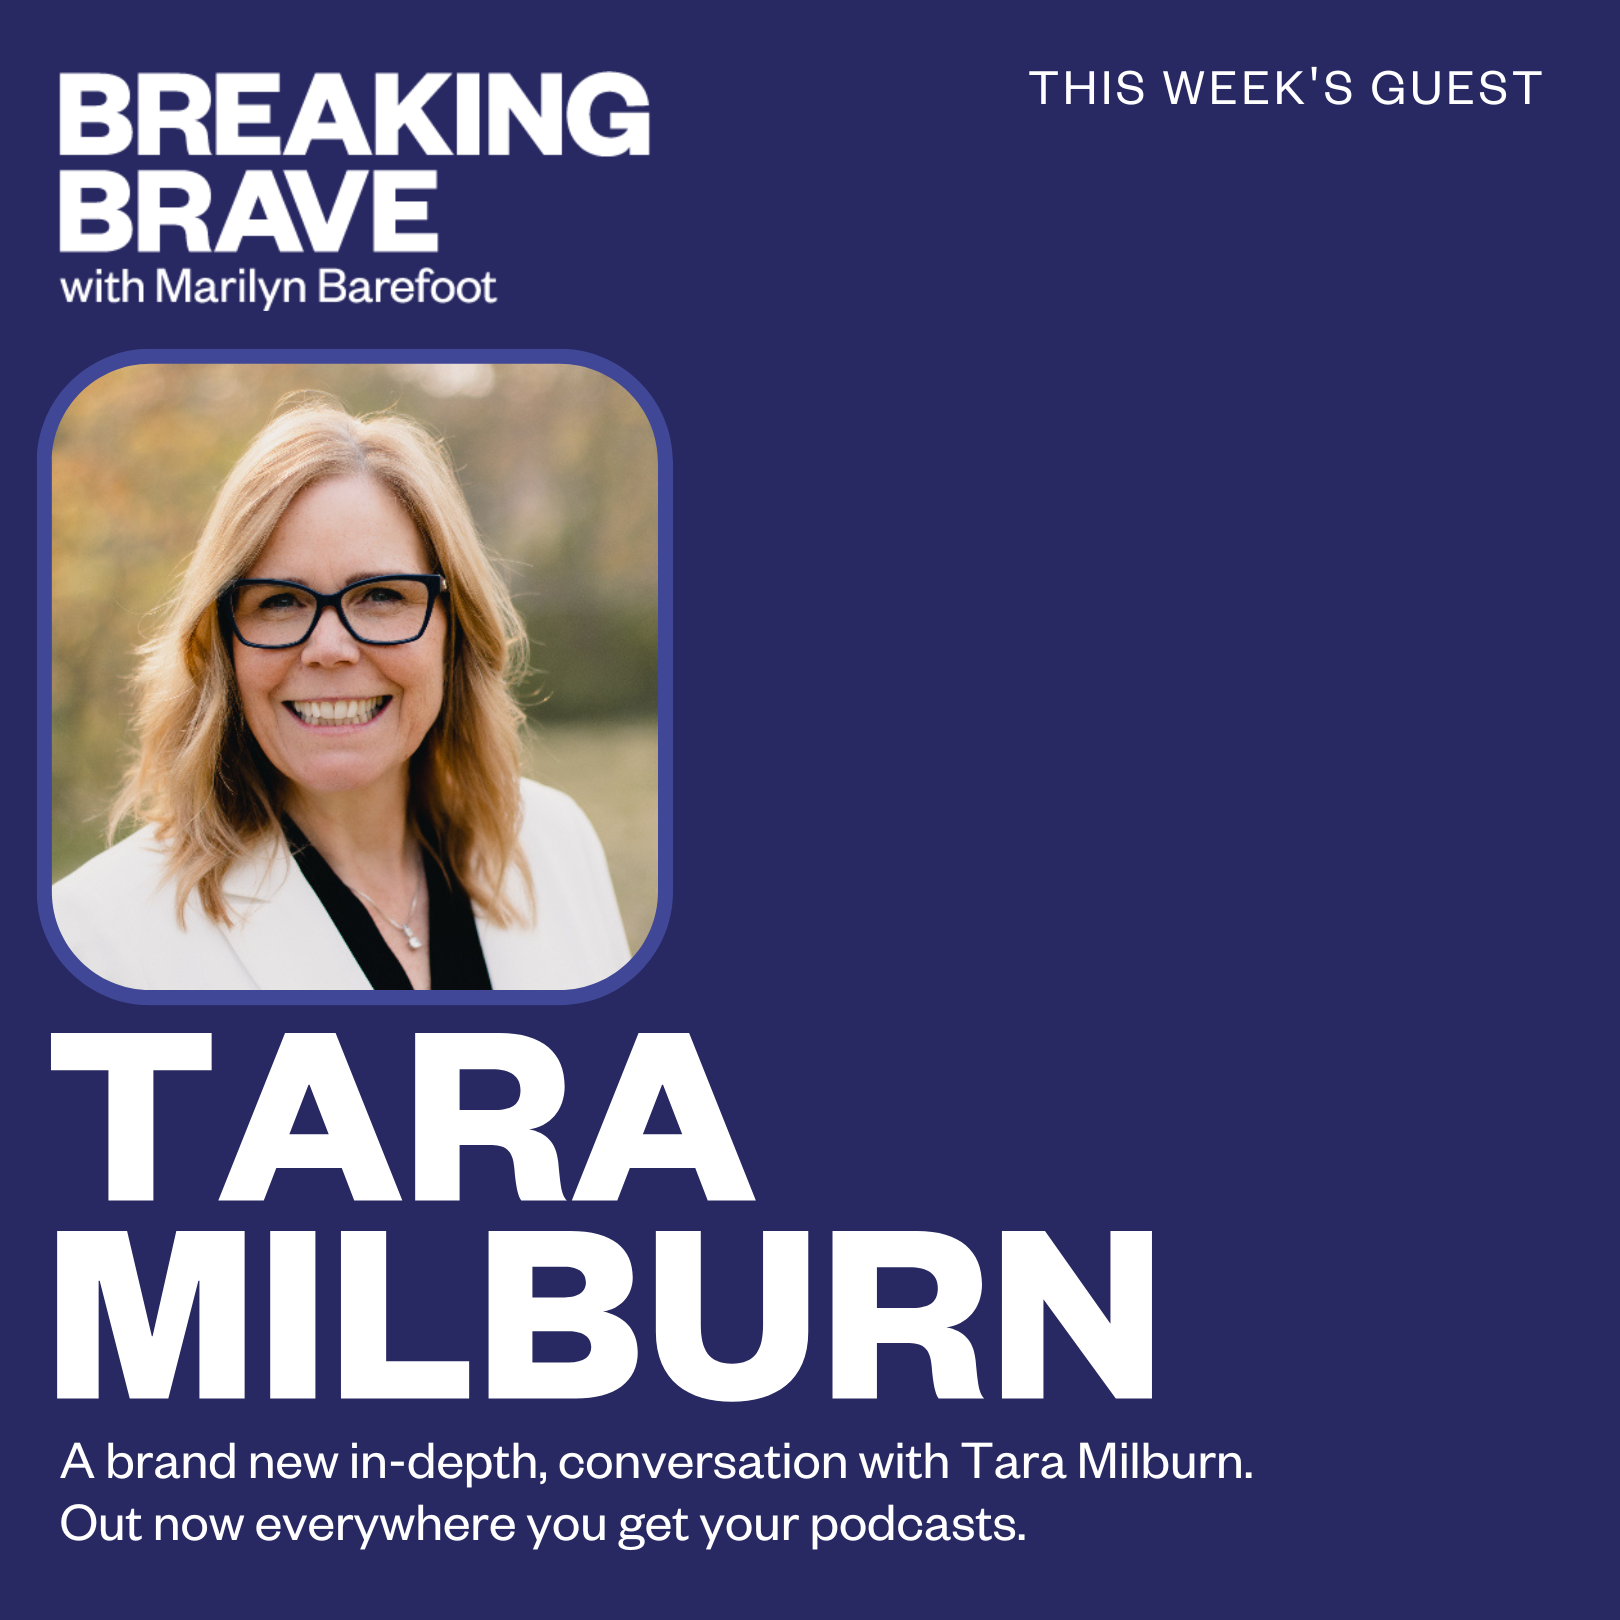 Breaking Brave with Marilyn Barefoot interviewing Tara Milburn